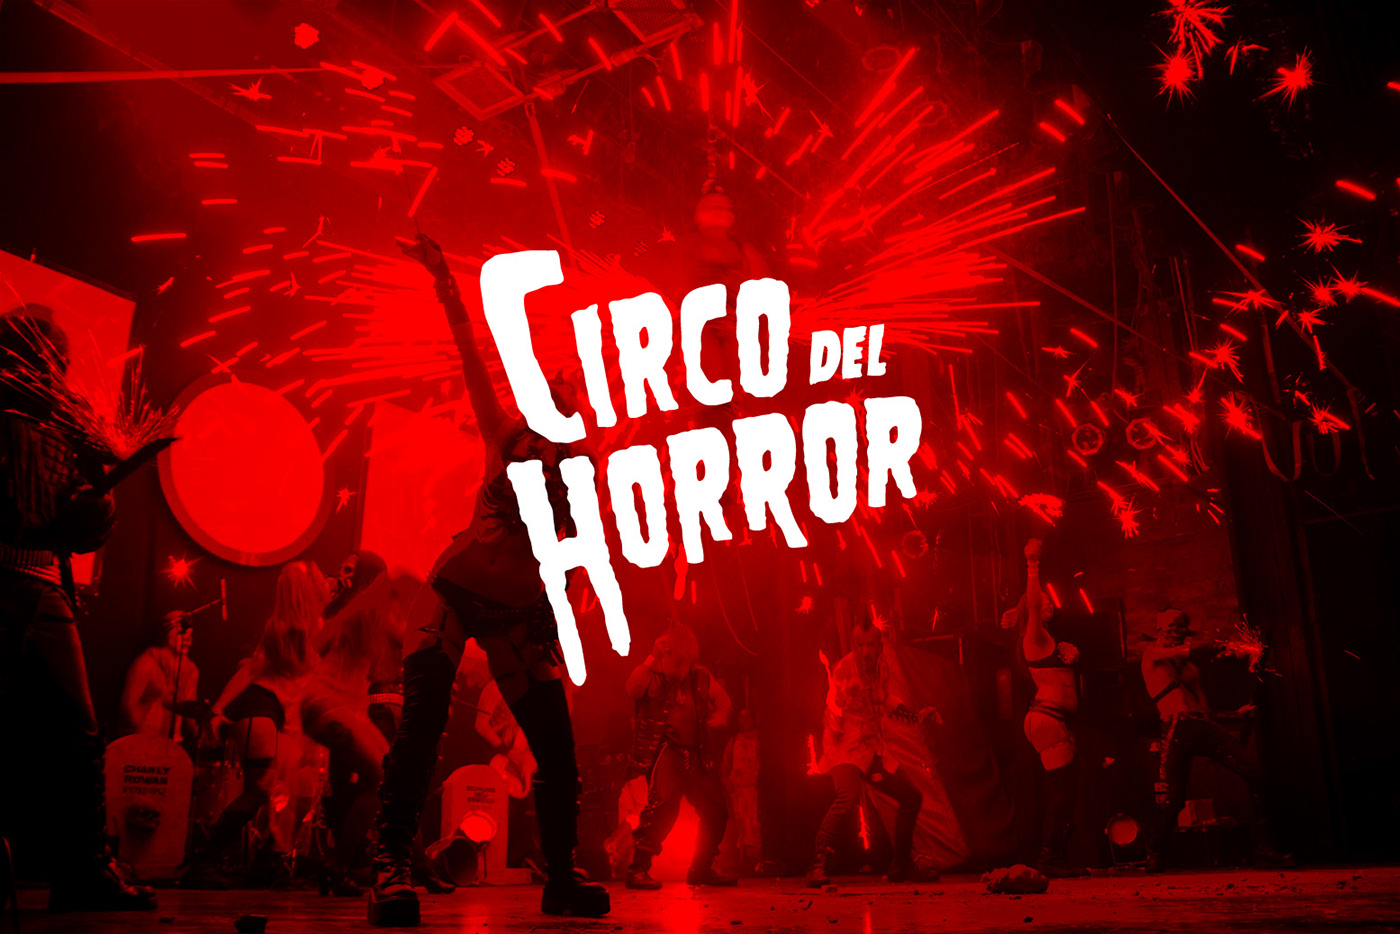 circo del horror nd teatro horror circo carnaval de fenomenos